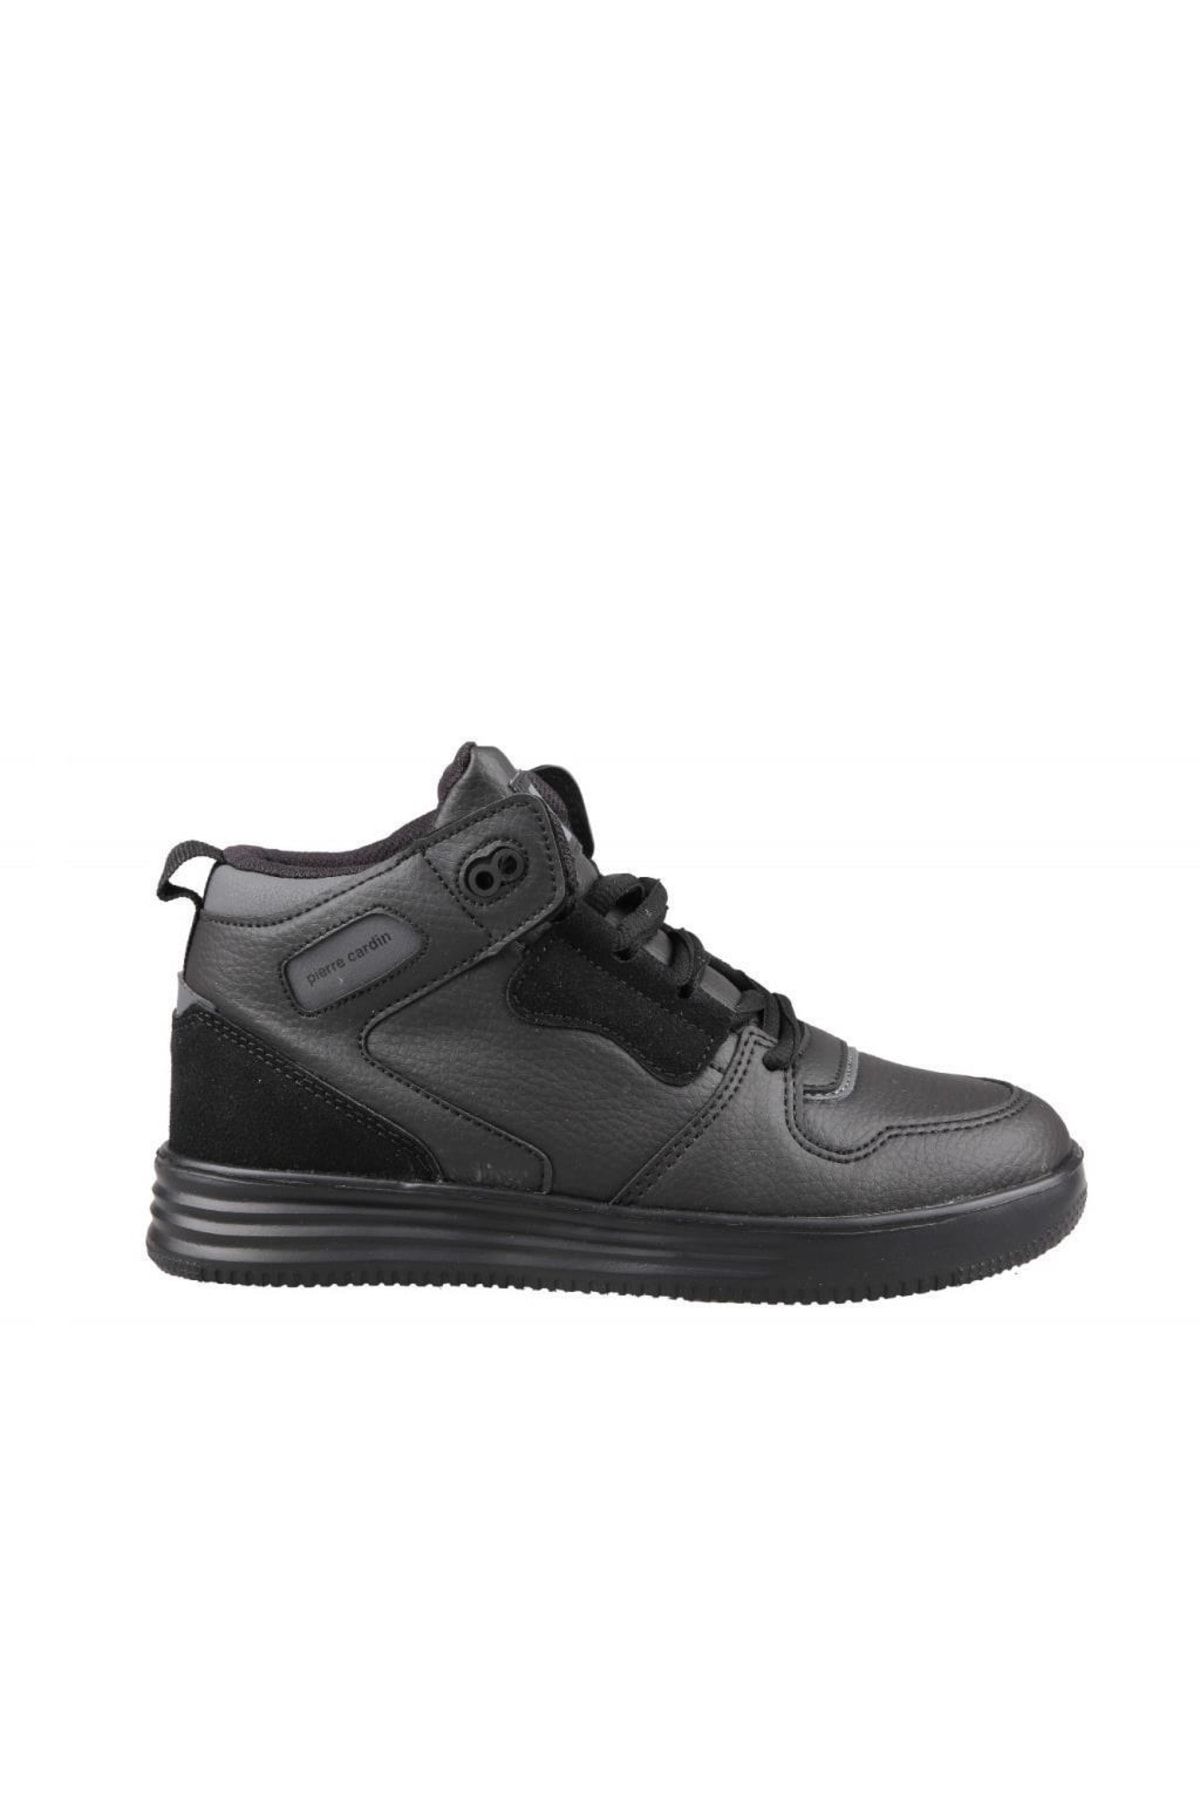 Pierre Cardin Pc-31317 Siyah Unisex Sneakers